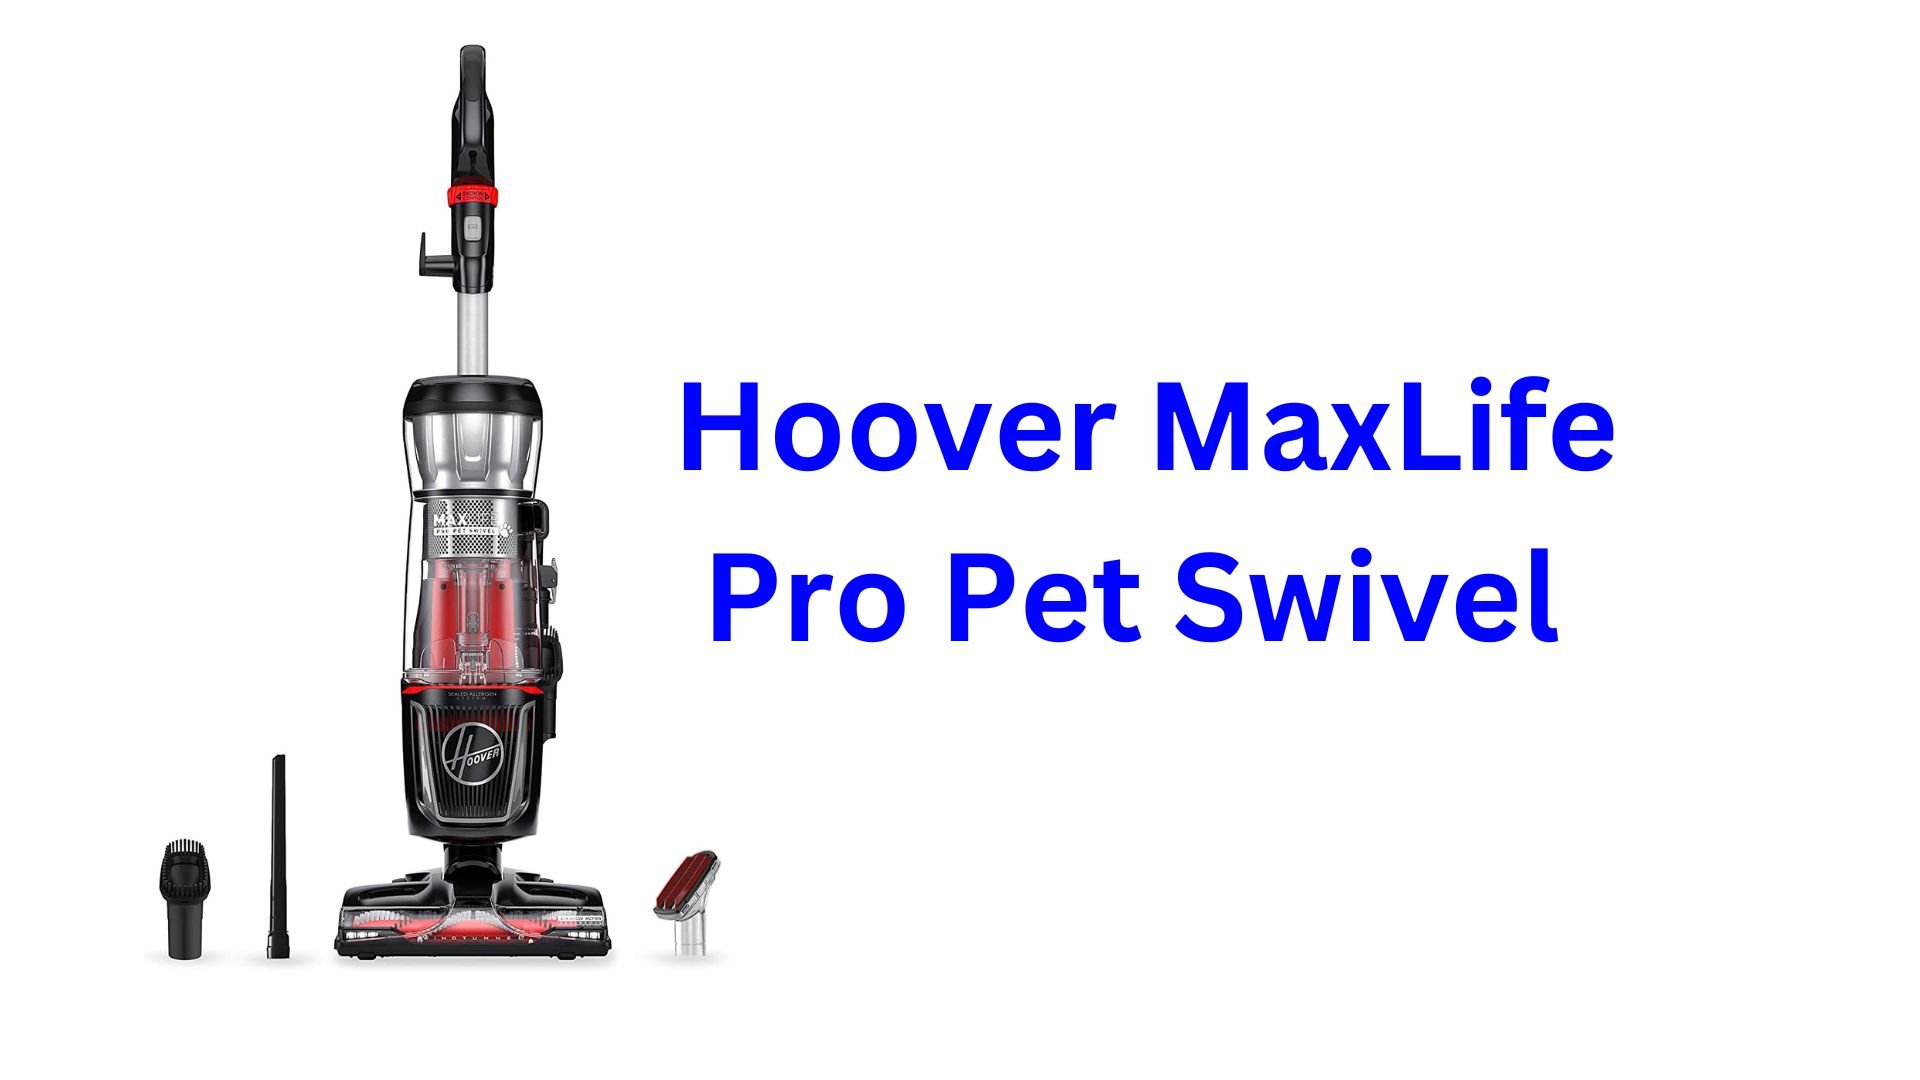 Hoover MaxLife Pro